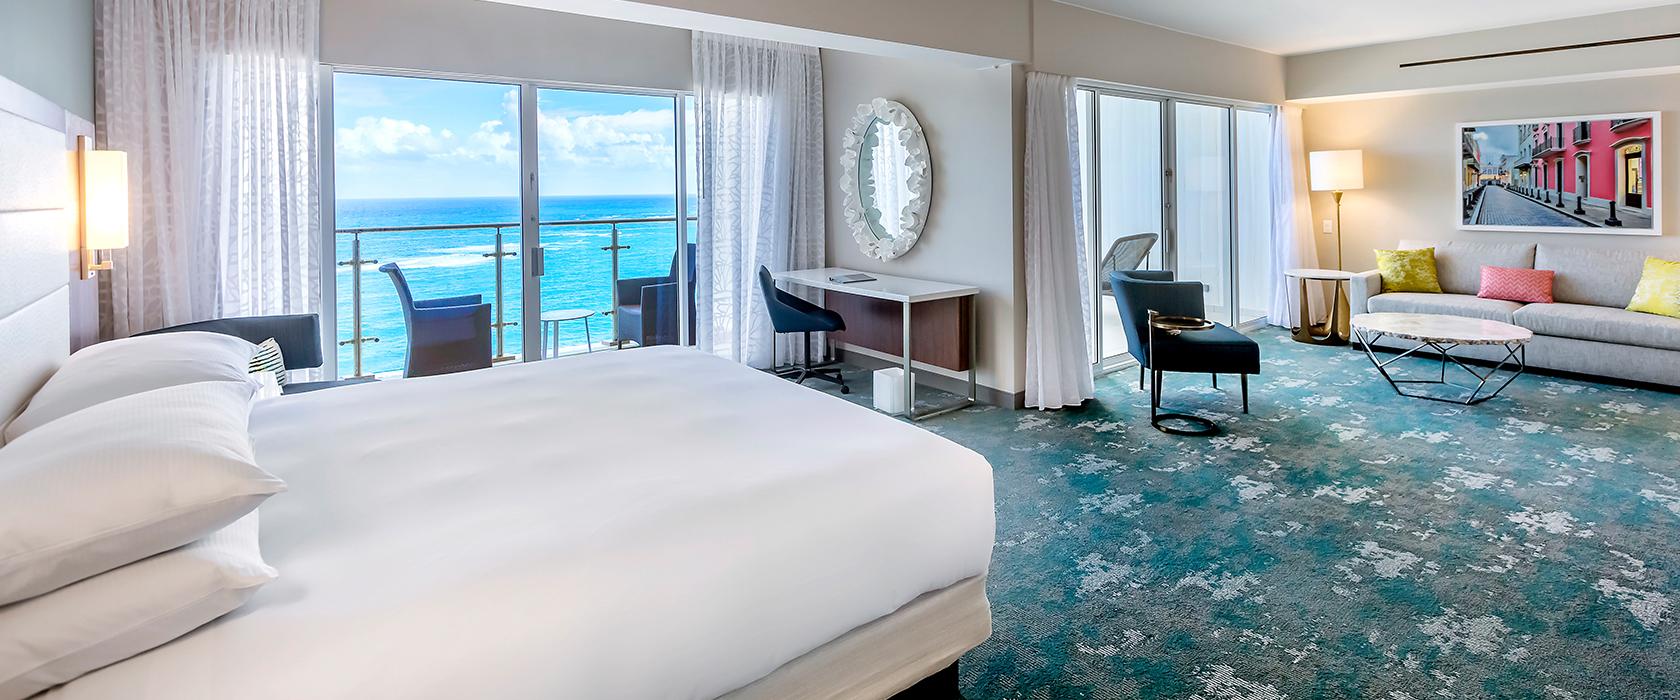 Caribe Hilton Room view